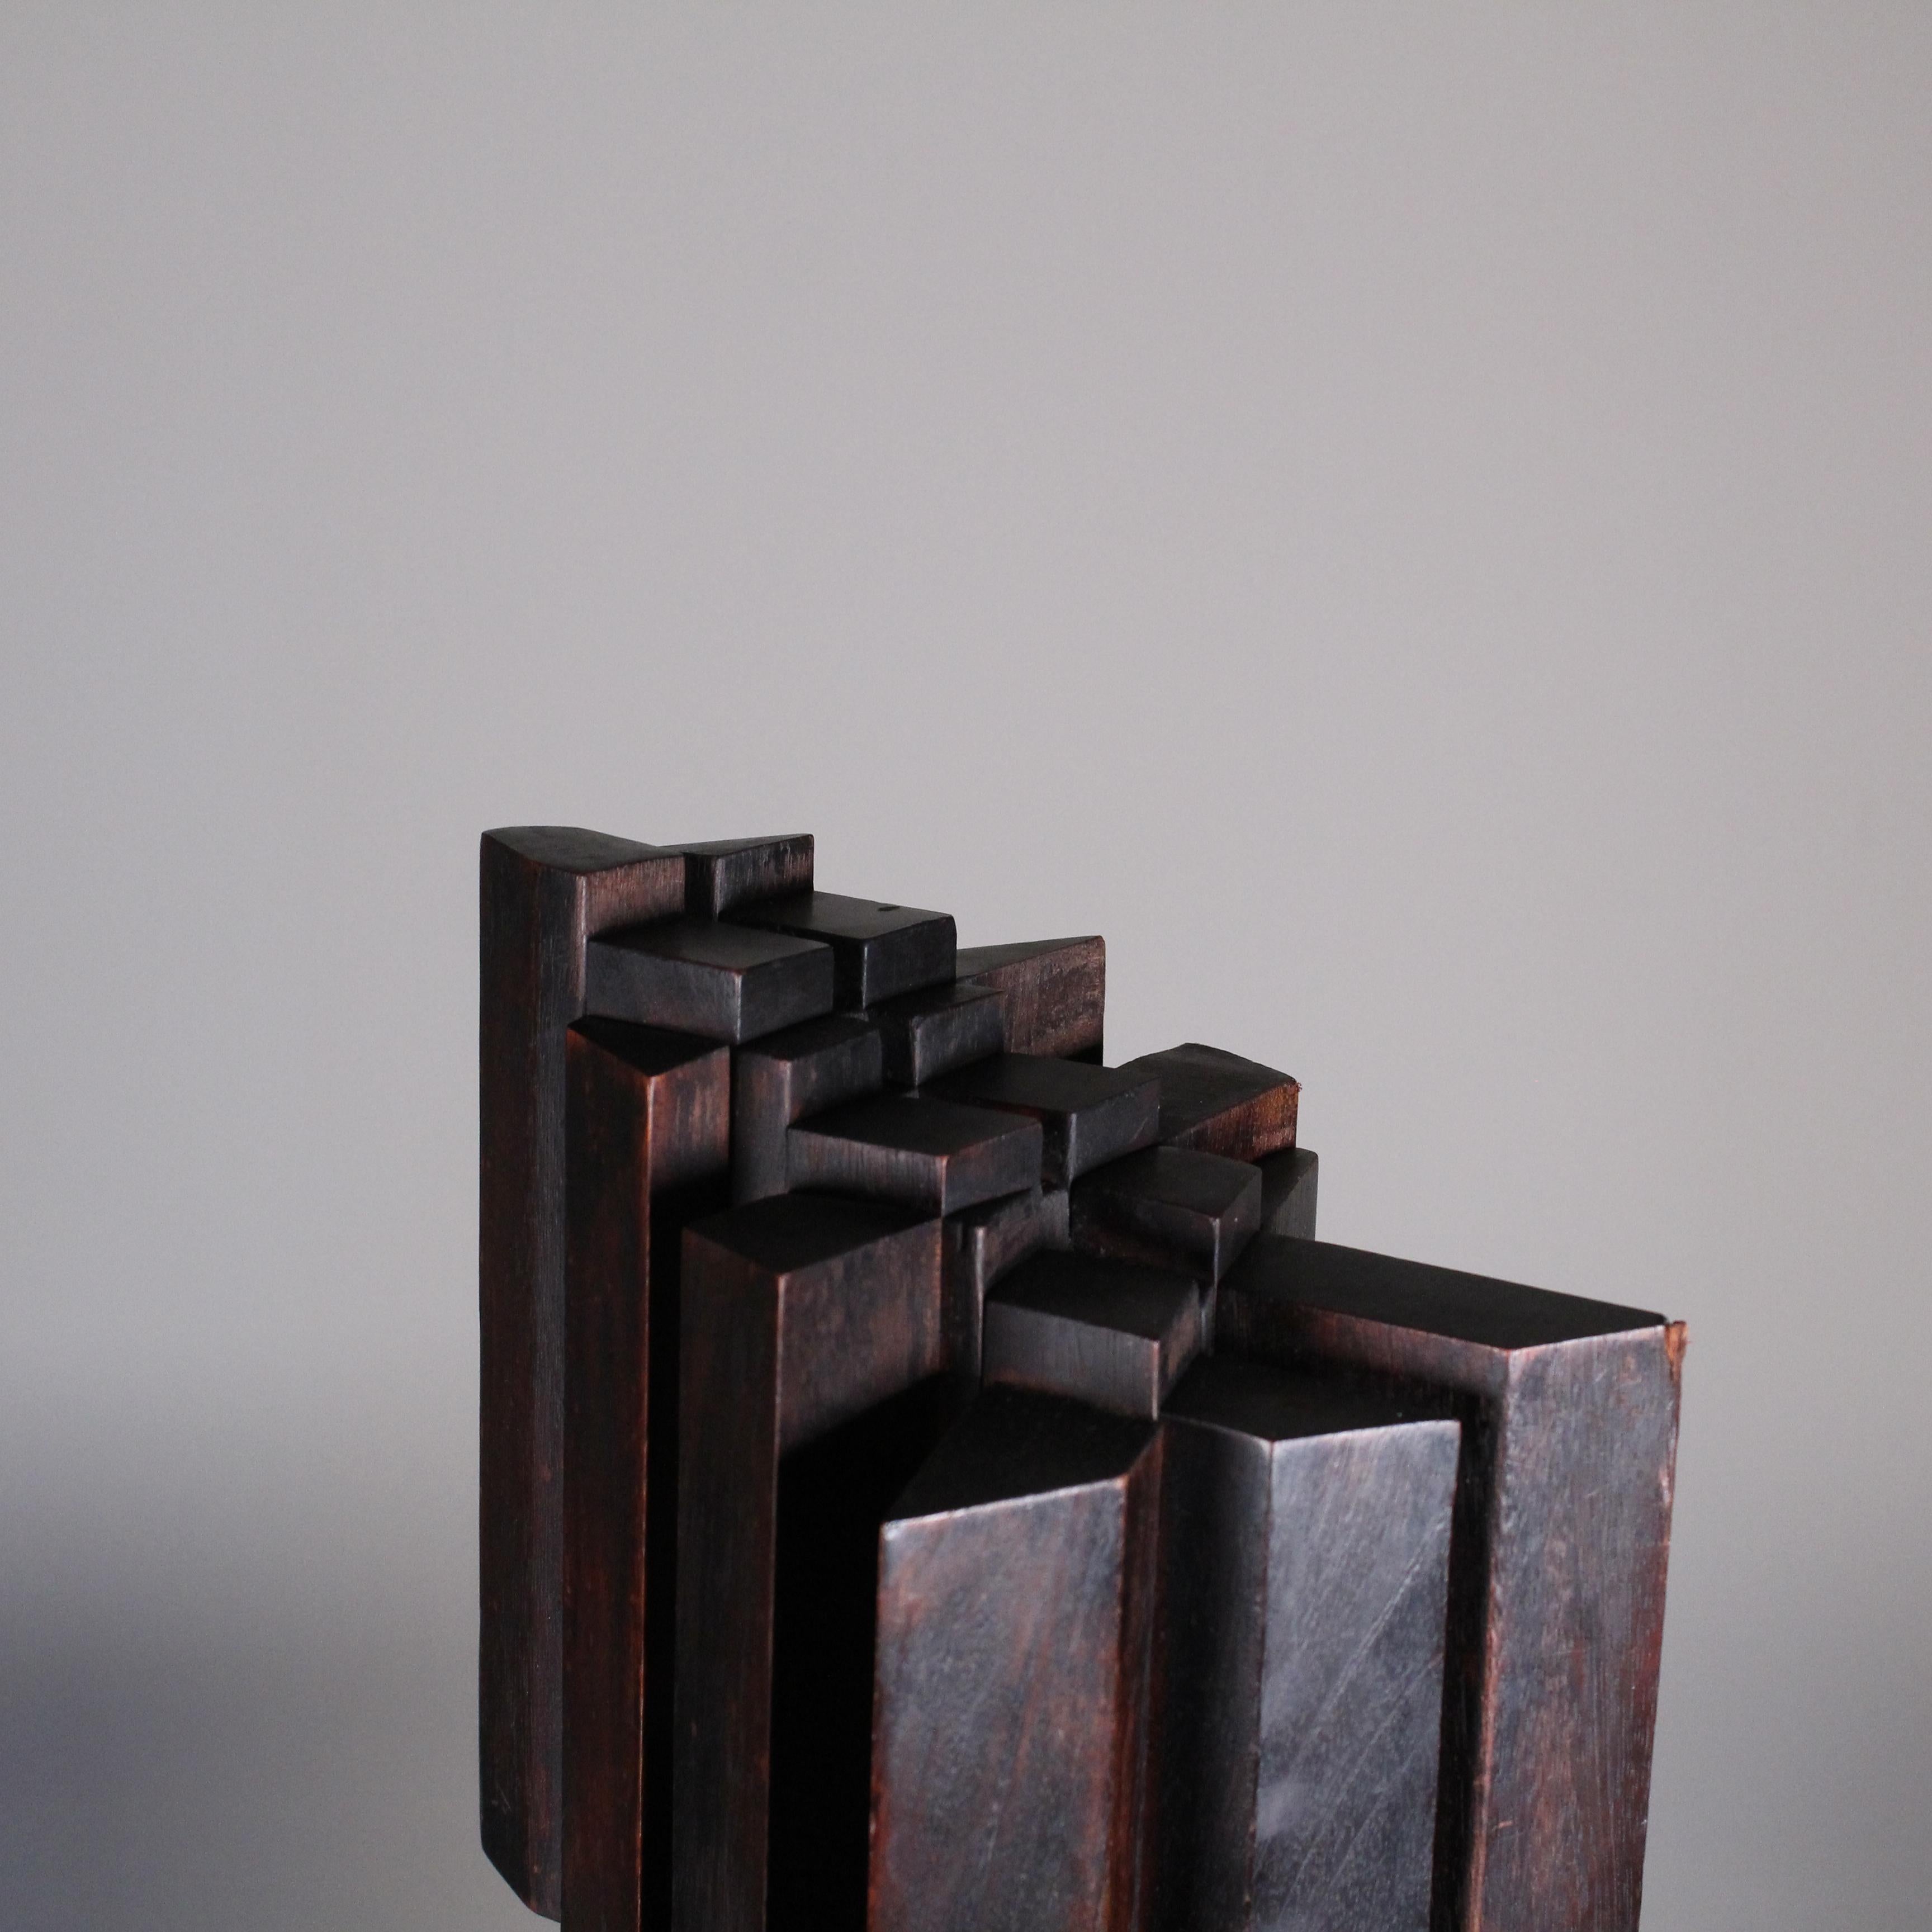 Kinetic Wood sculpture by Ben Ormenese